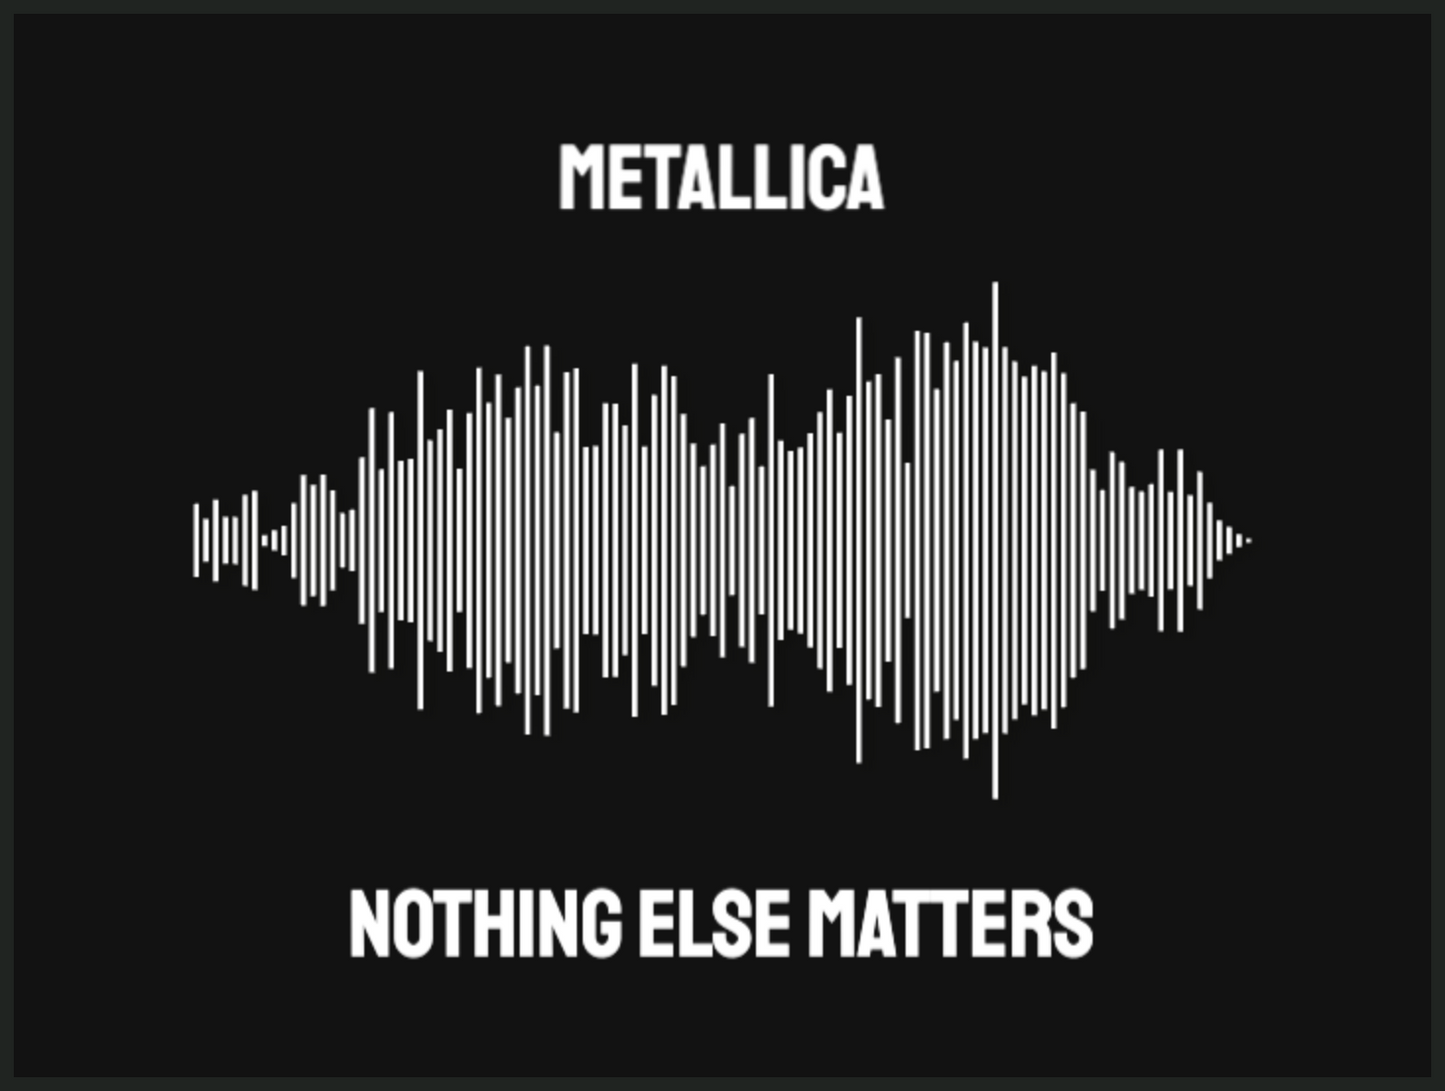 Metallica - Nothing Else Matters Printawave Unique Design #1685554077872